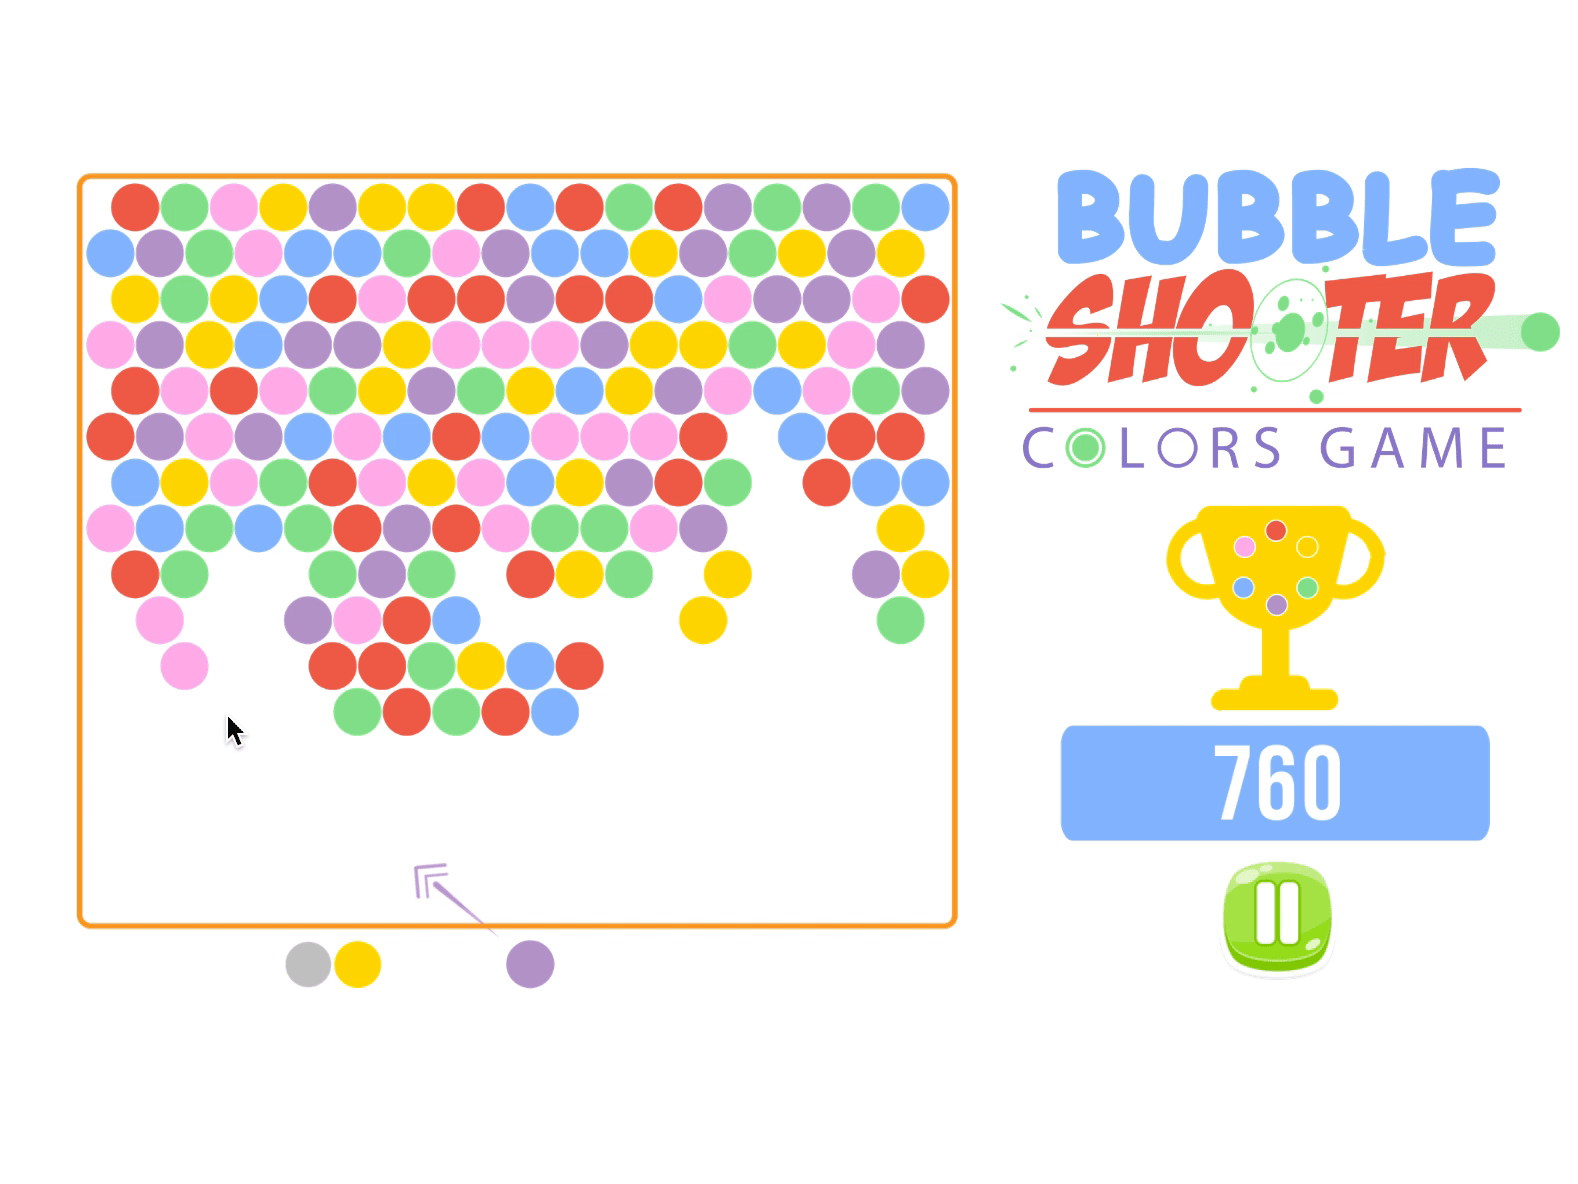 Bubble Shooter Colors Game Screenshot 3